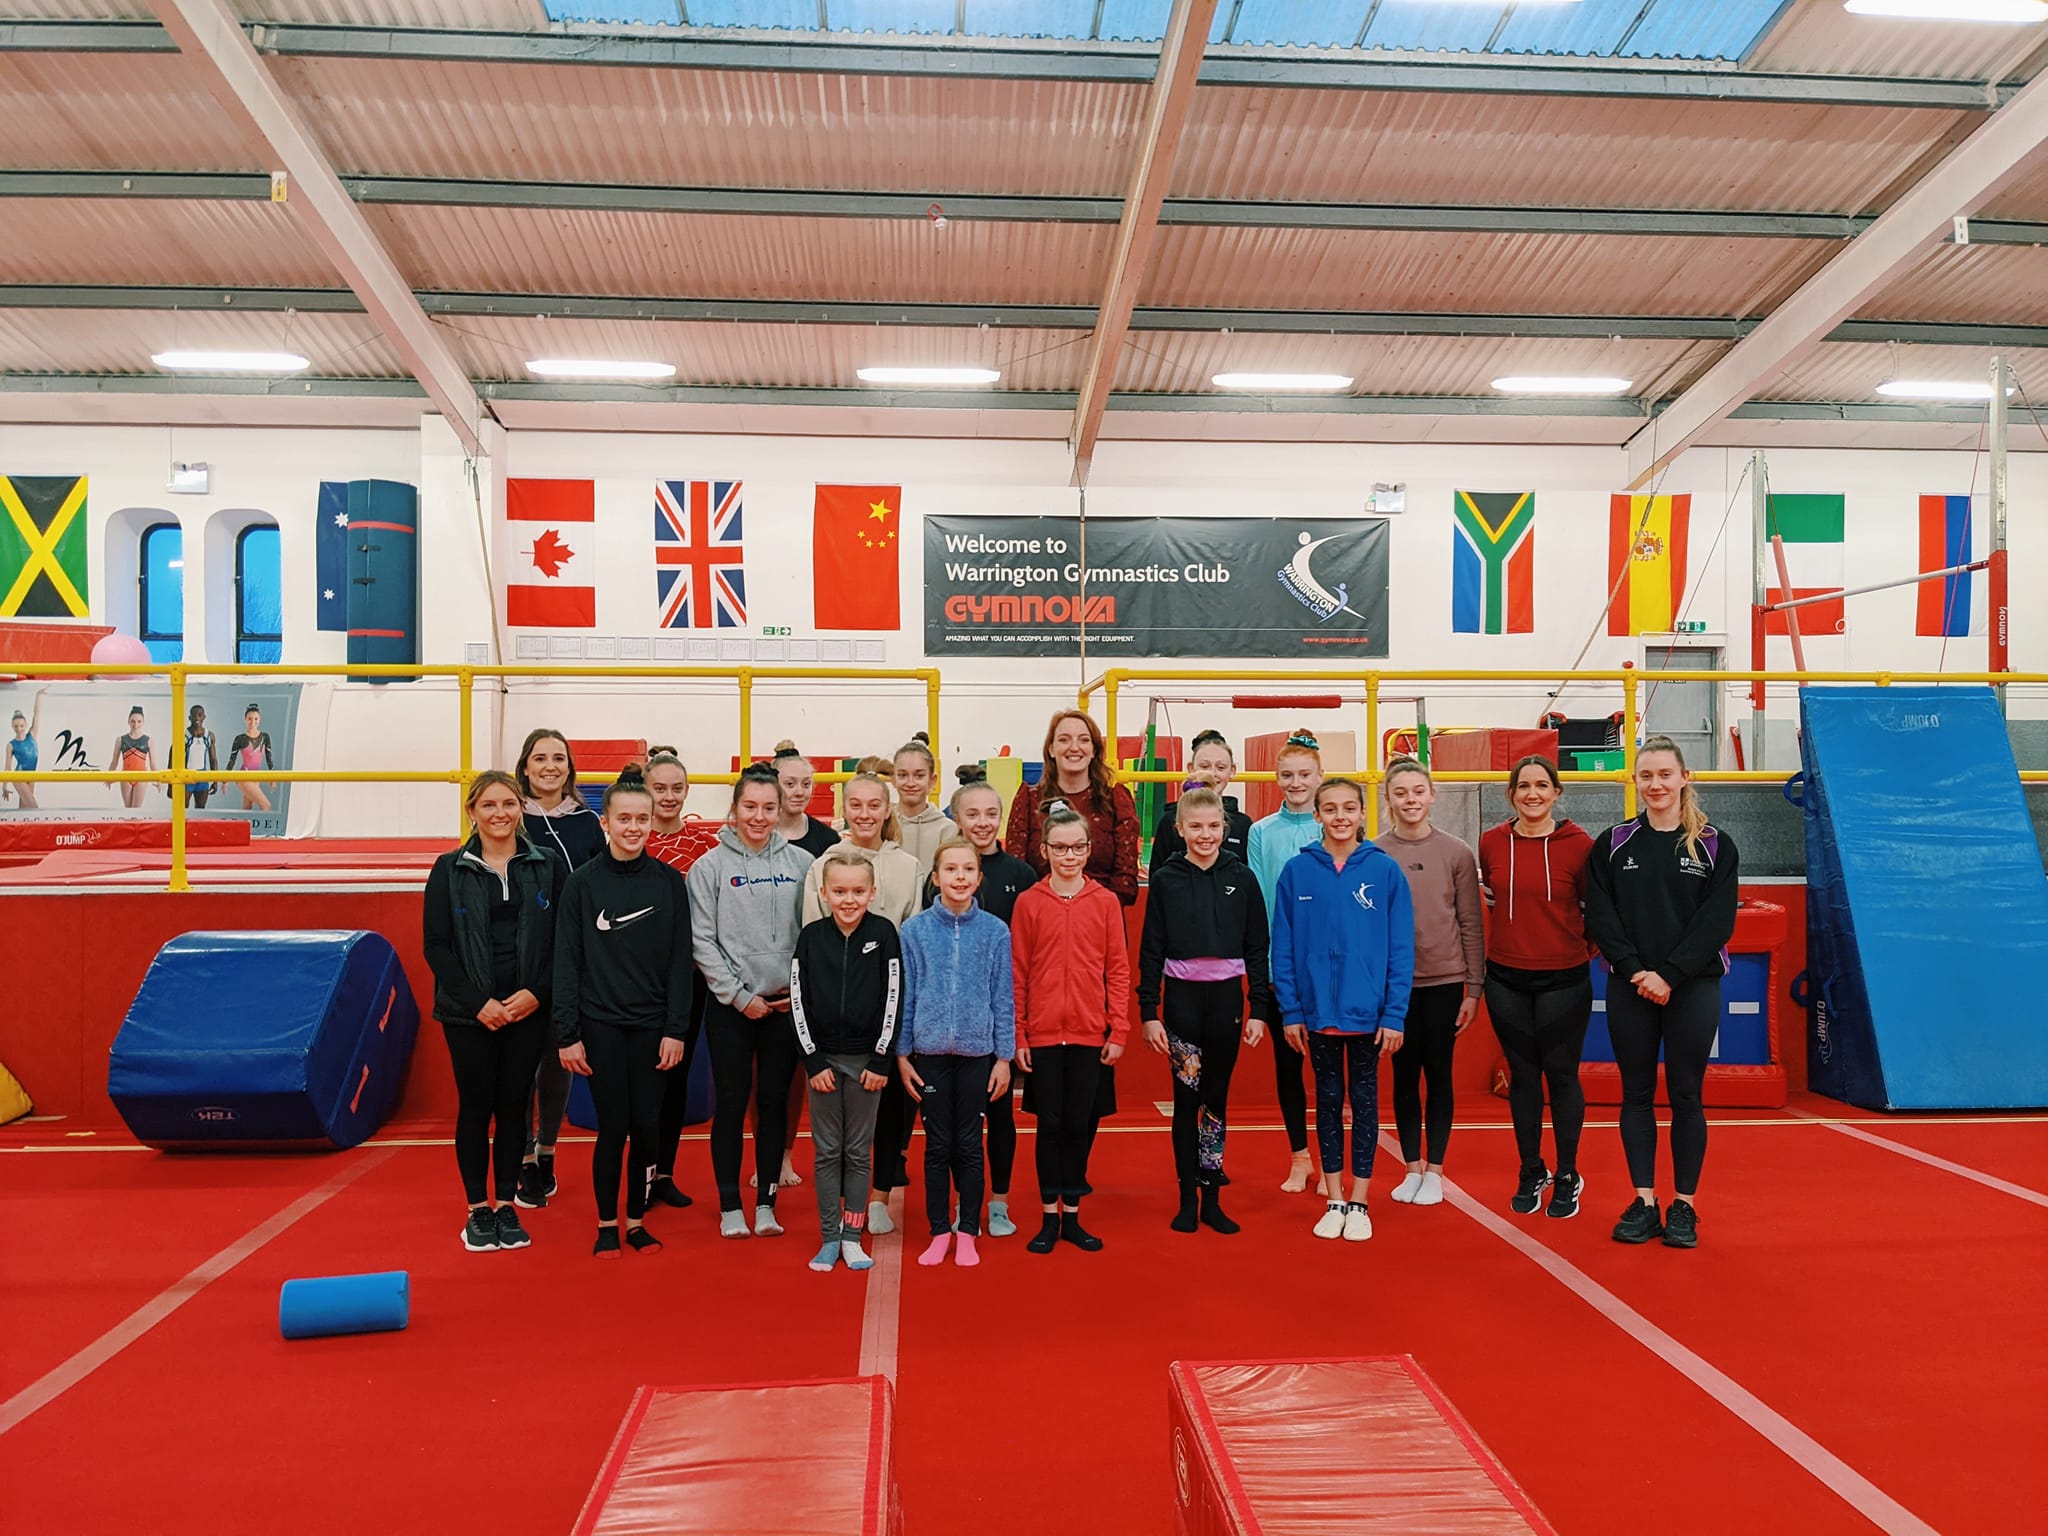 Warrington Gymnastics Club